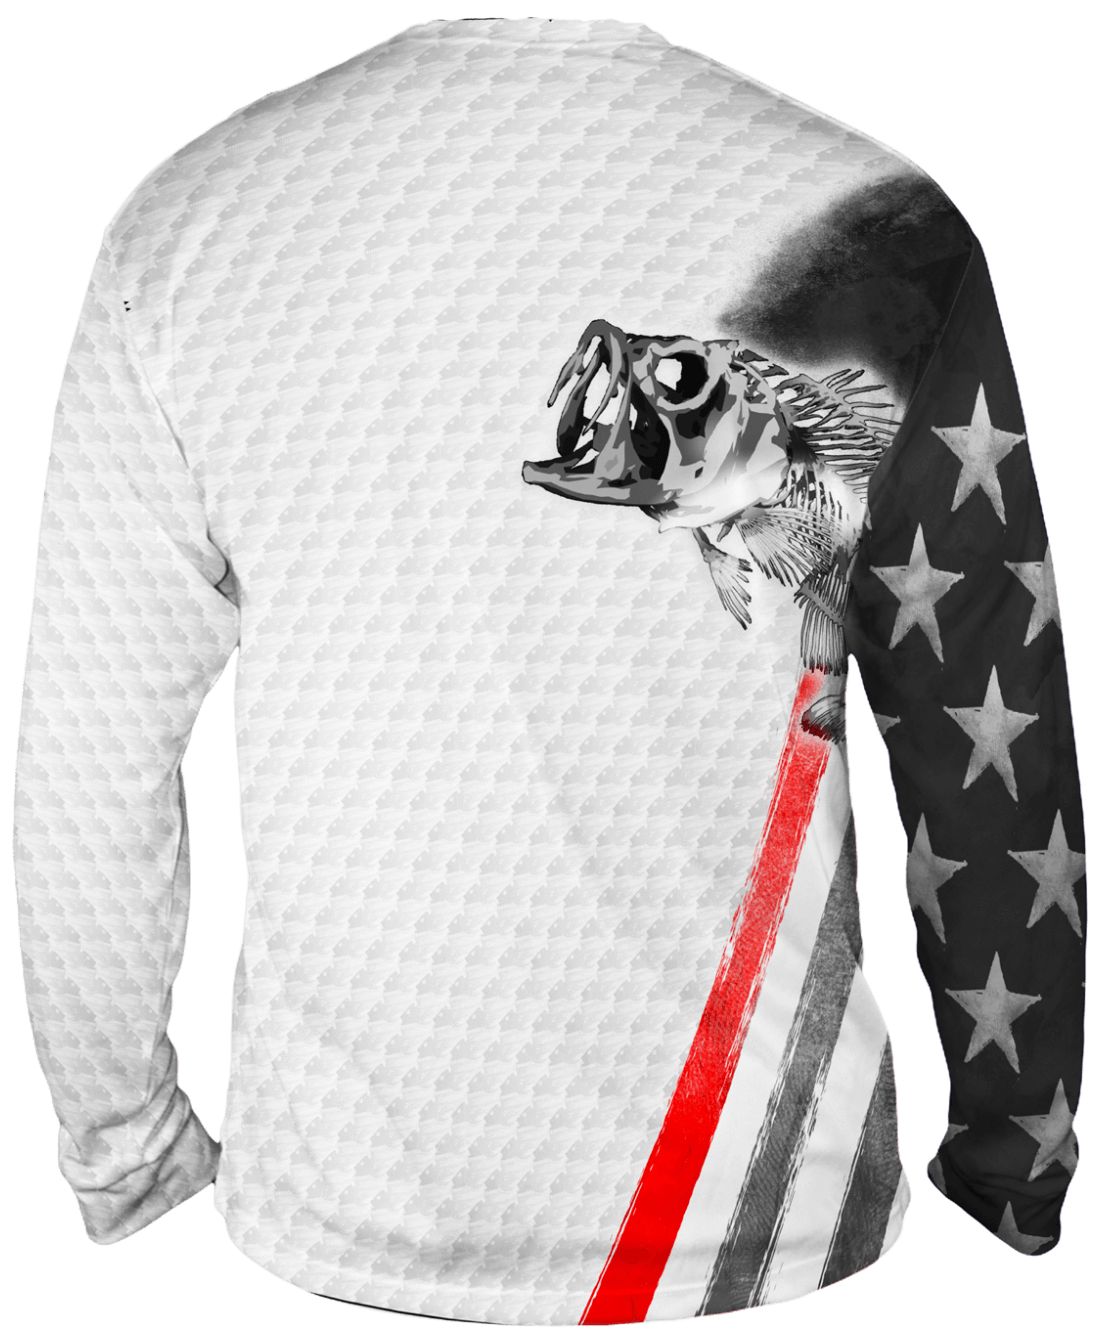 Bass Stars & Stripes Long Sleeve UV Fishing Shirt